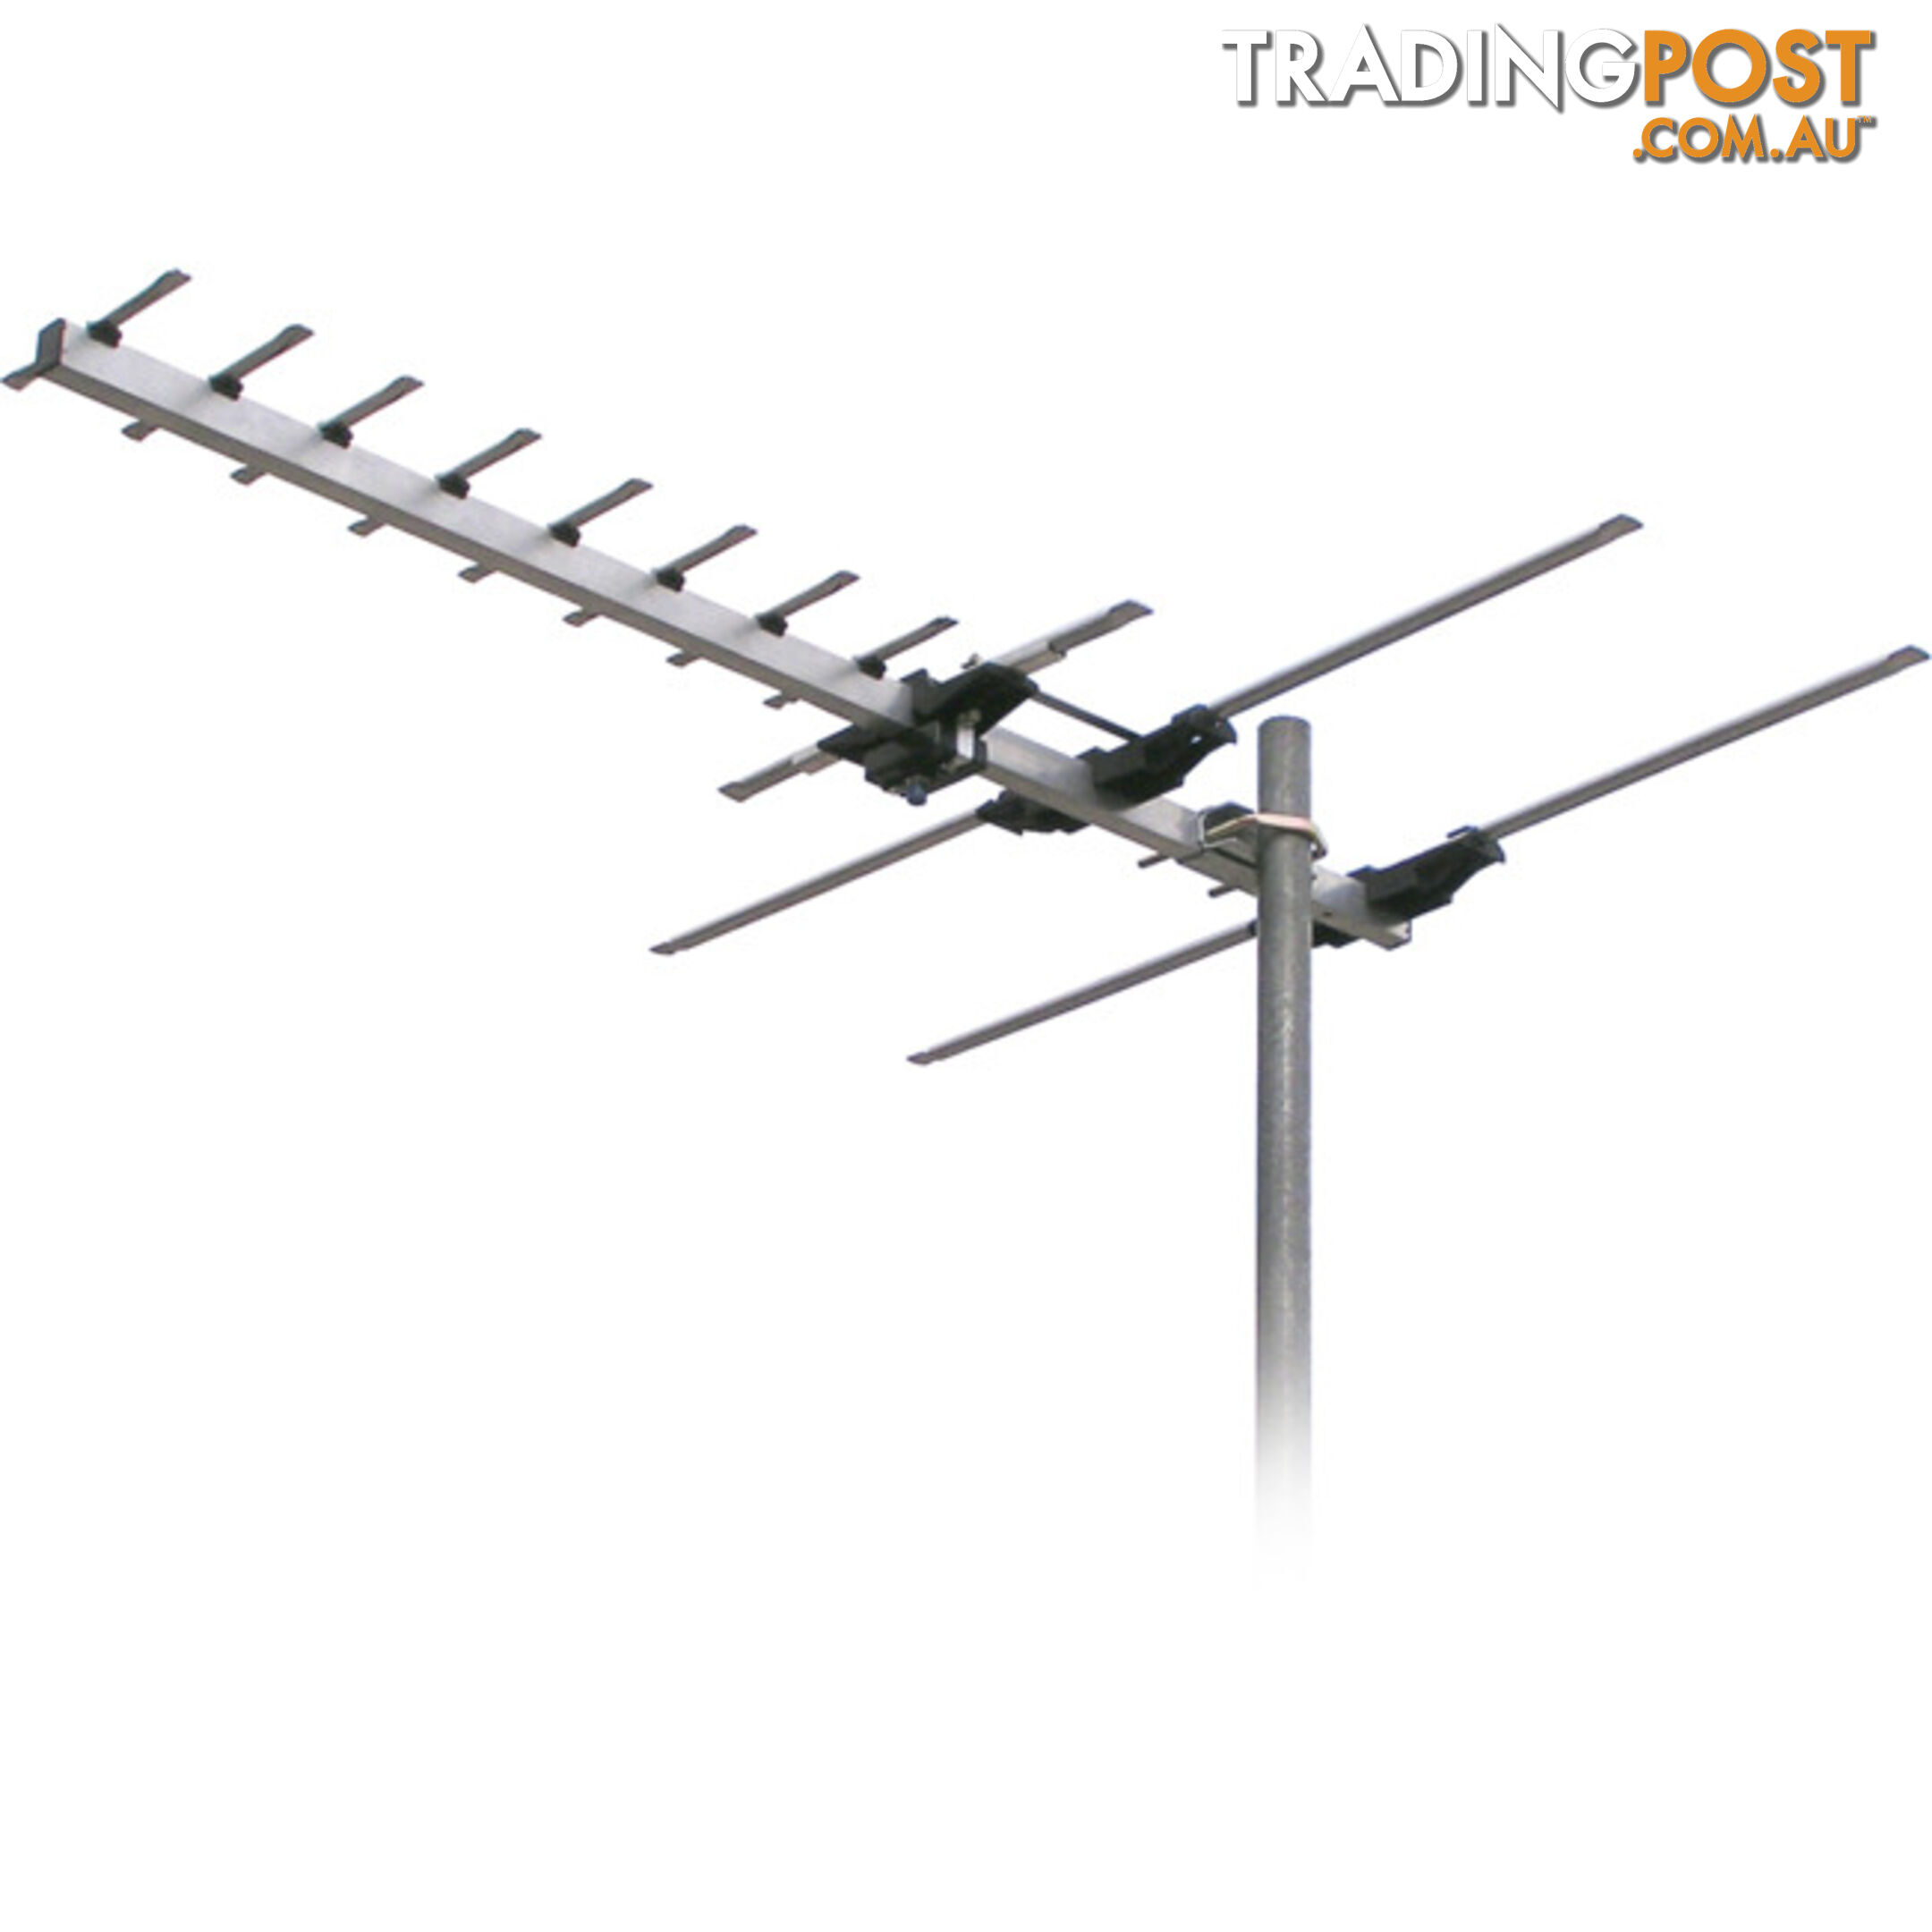 01MM-MD11 11 ELEMENT UHF/VHF ANTENNA VHF 6-12 AND UHF 28-46